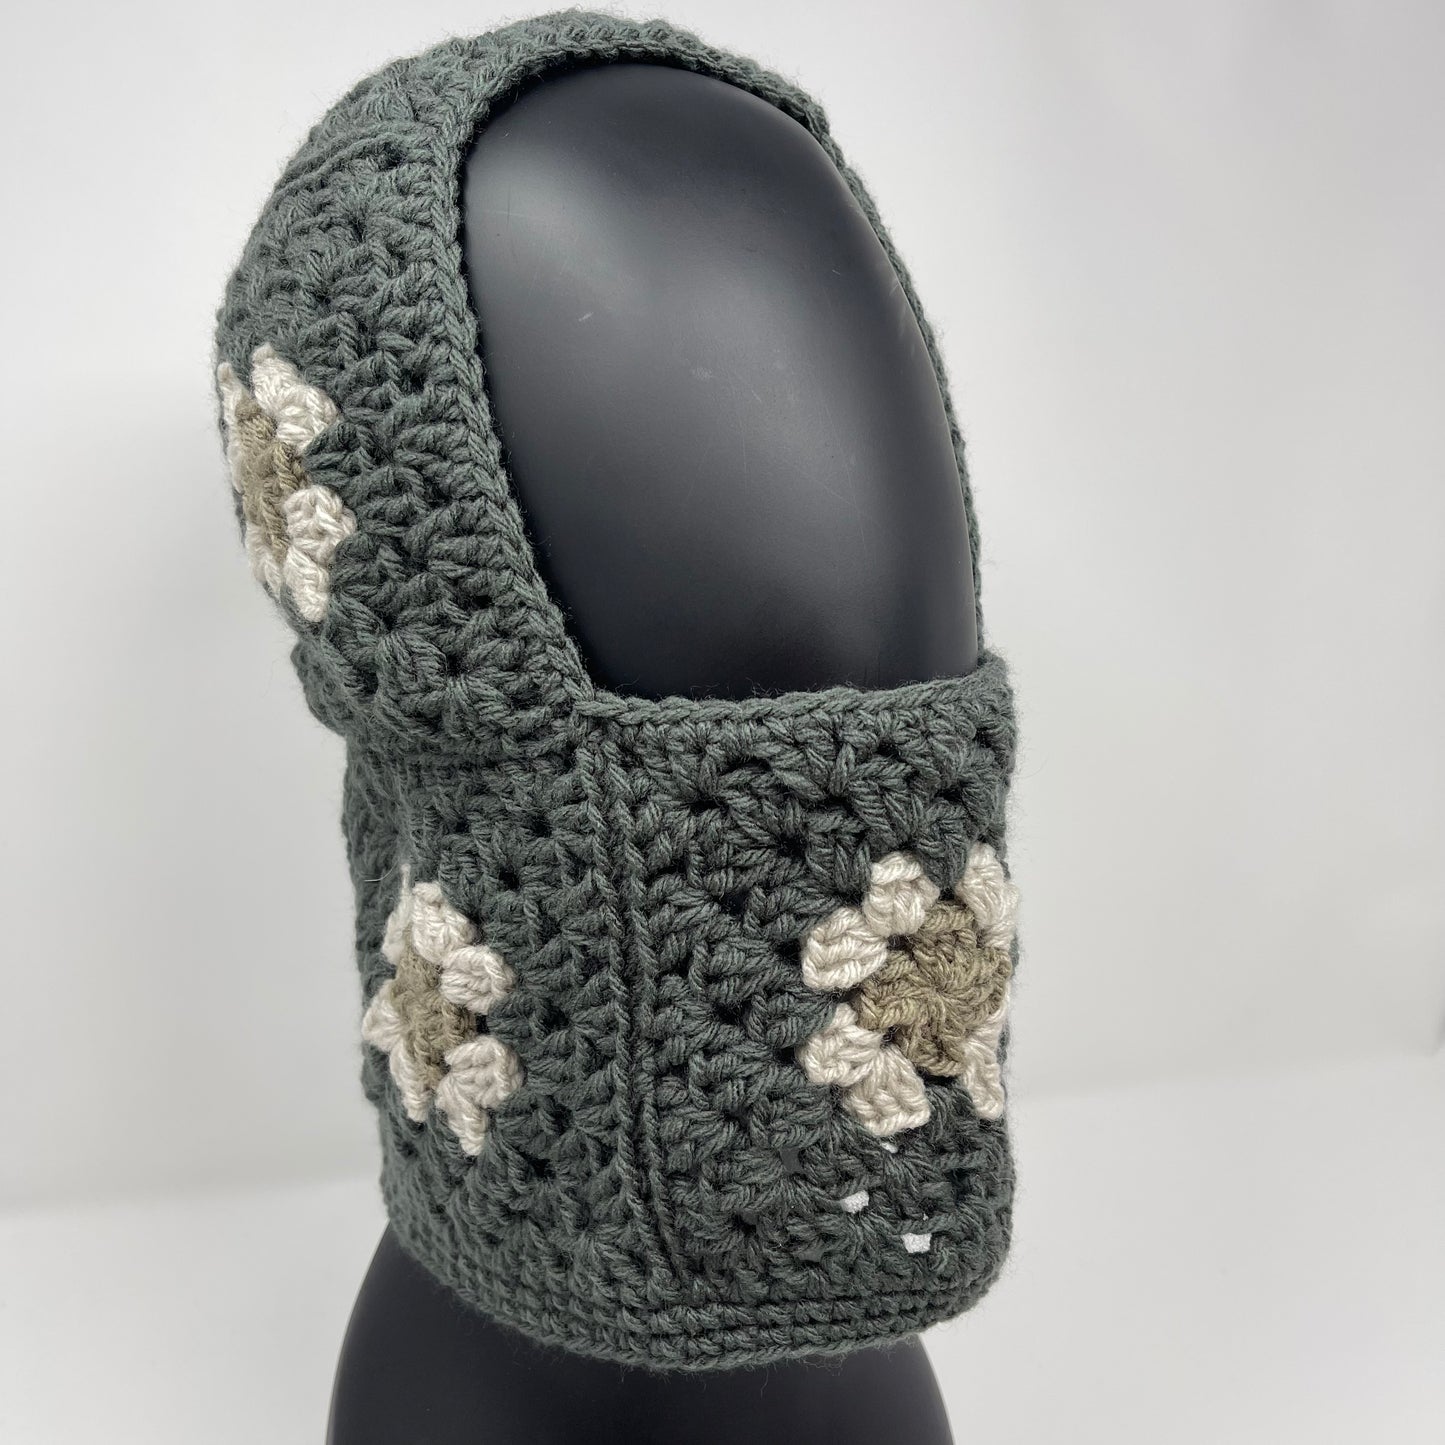 Crochet Balaclava - Dark Grey with Grey tone Flowers